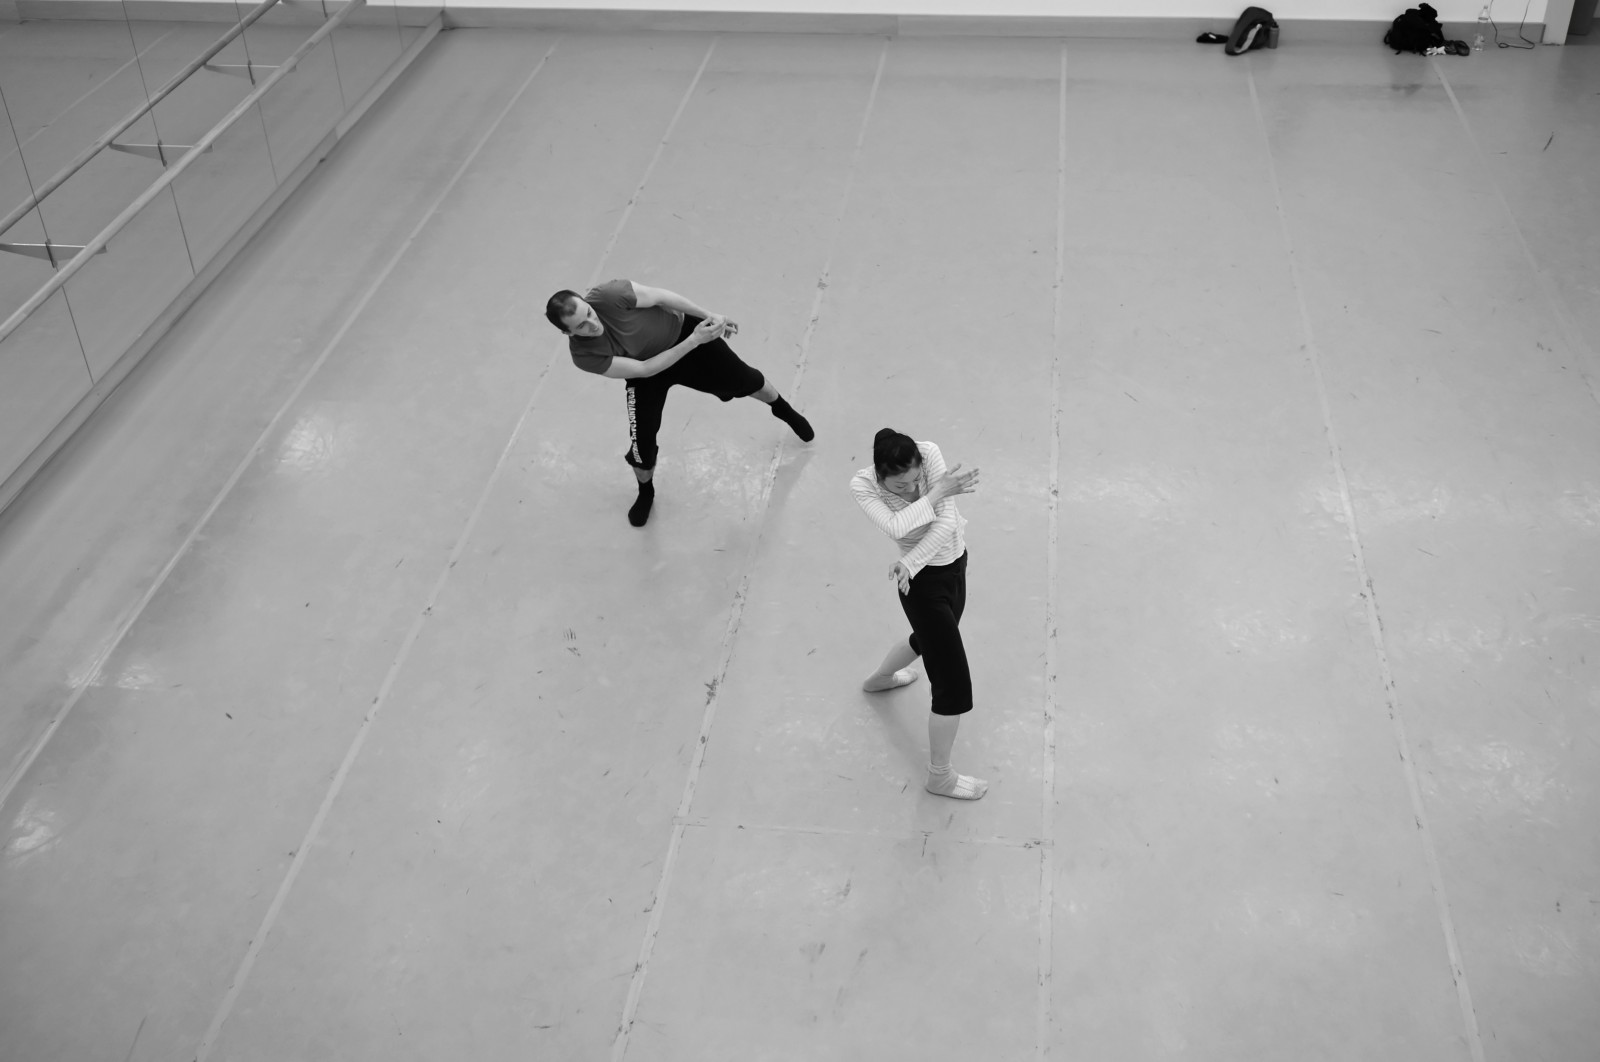 rehearsal photo
https://make-move-think.org/